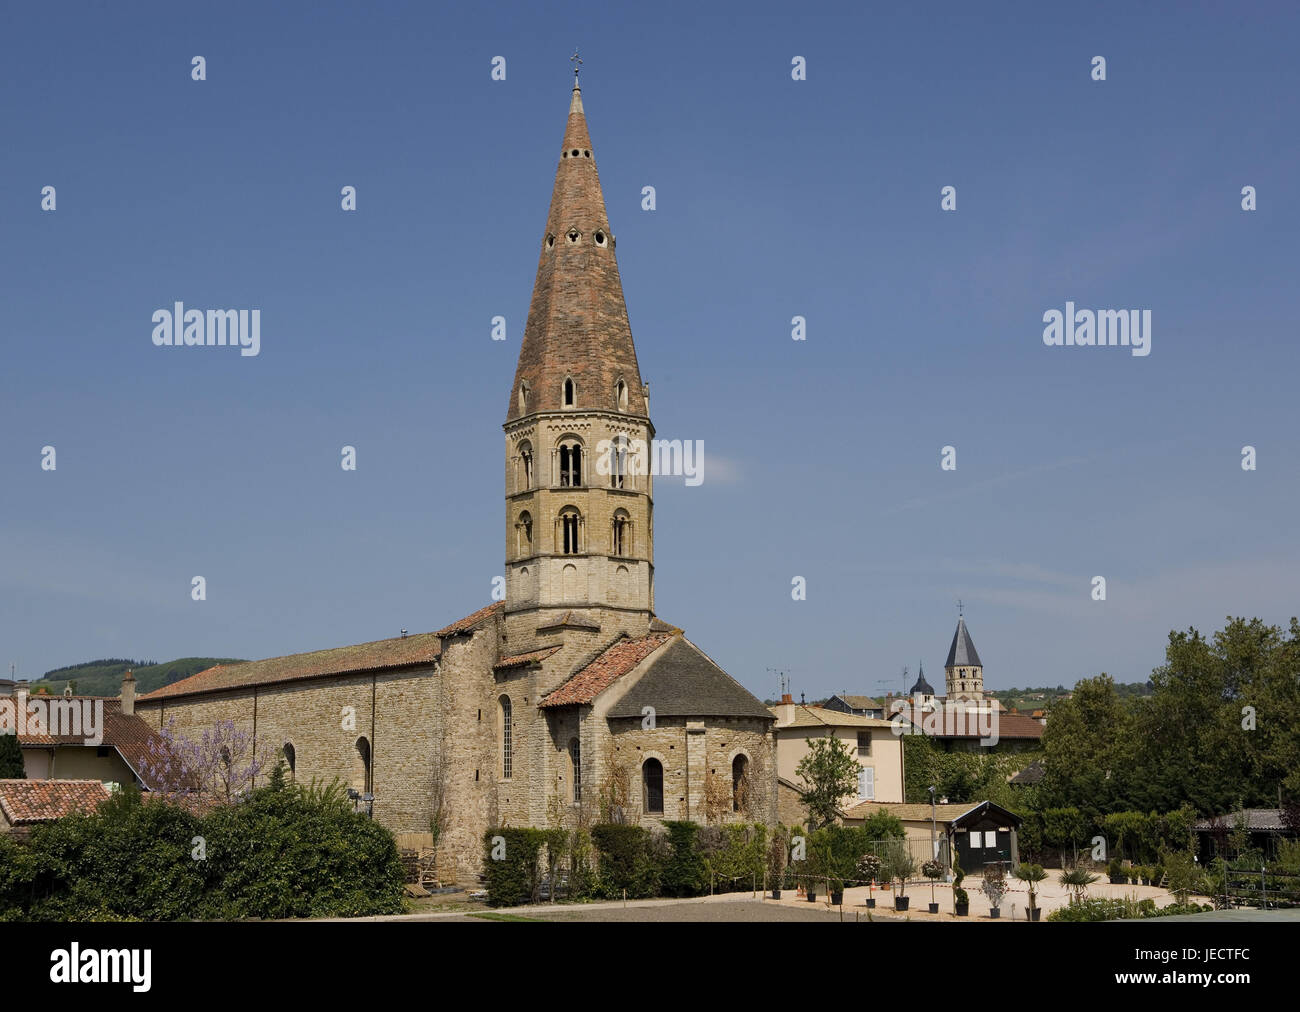 France, Burgundy, department Saone-et-Loire, Cluny, church 'Eglise Saint-Marcel', Stock Photo